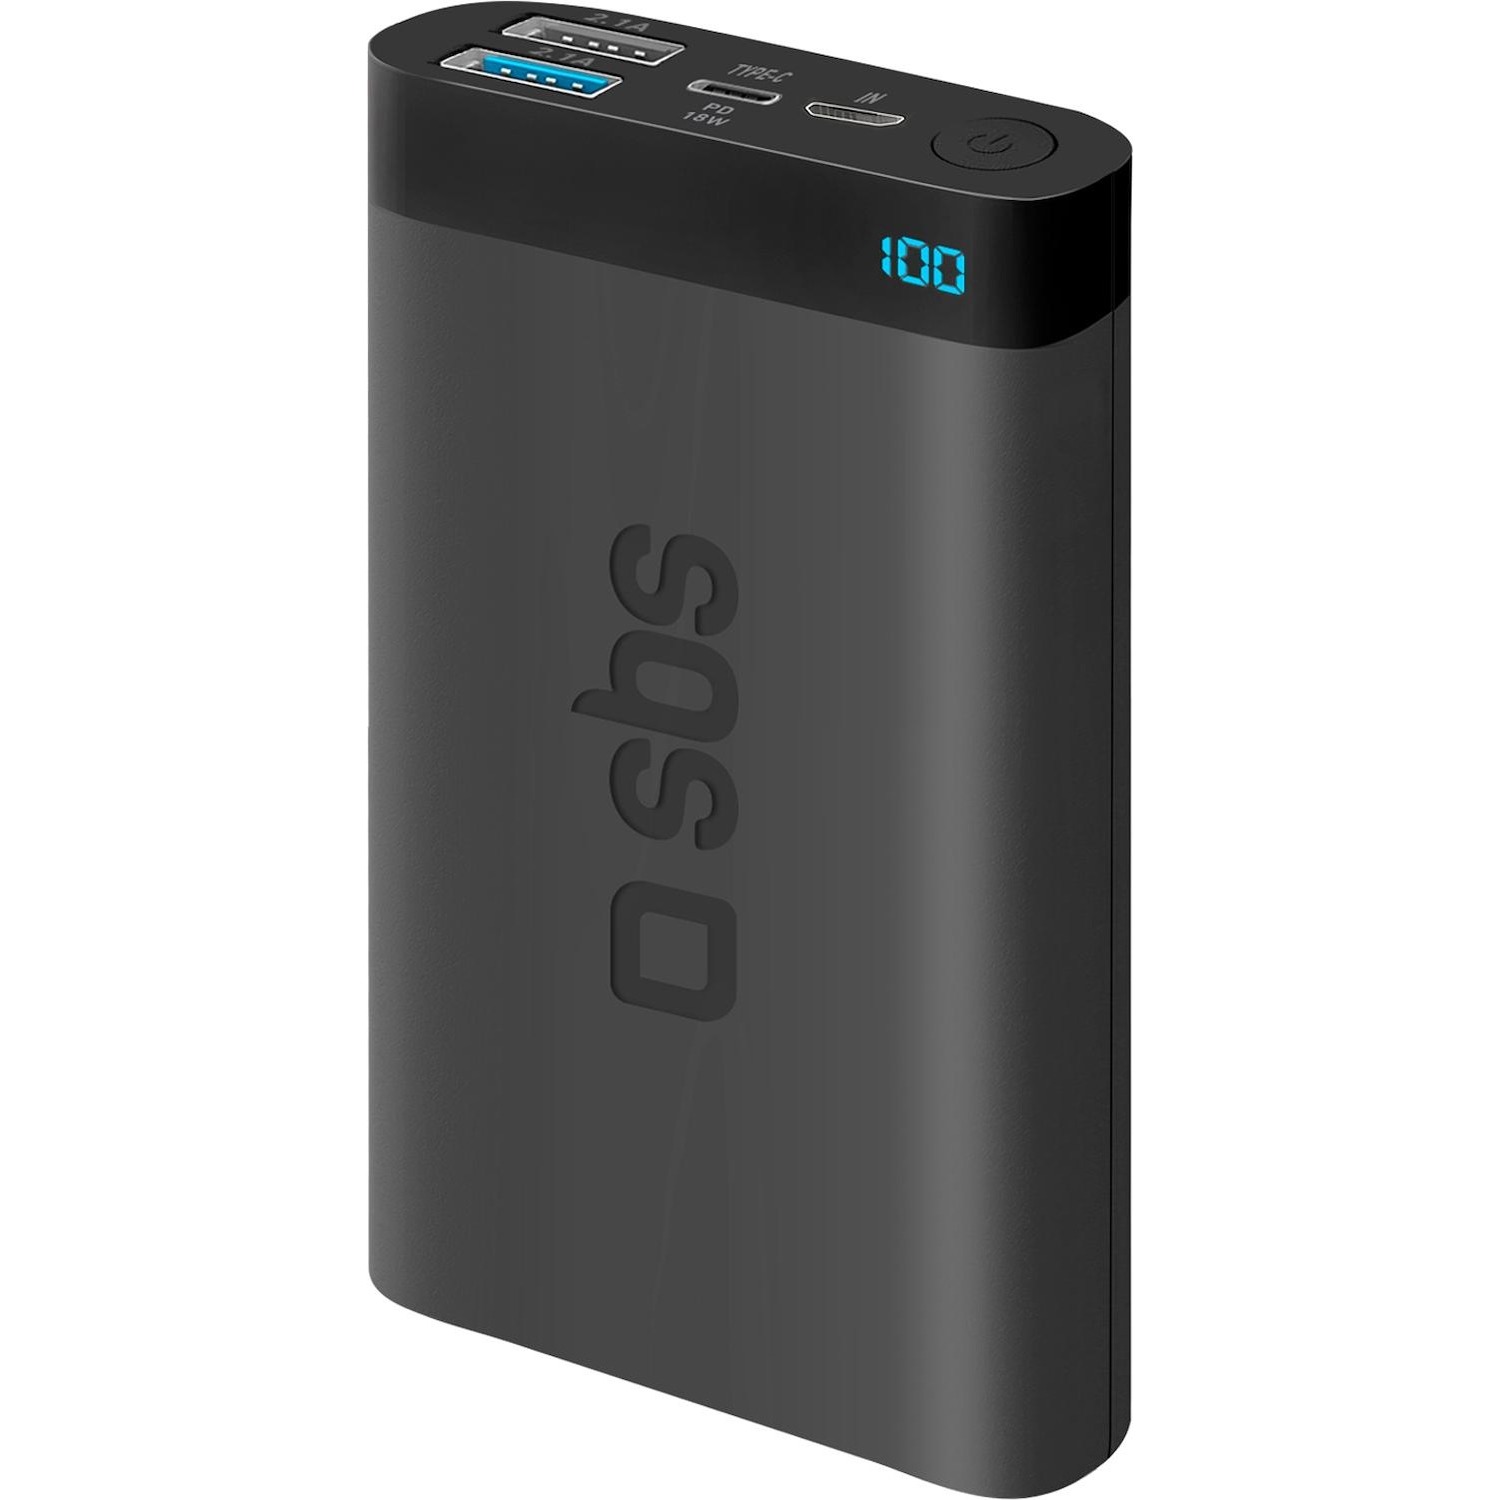 Immagine per Caricabatterie portatile a ricarica rapida SBS    serie pocket con display LED e capacita'10000 mAh da DIMOStore